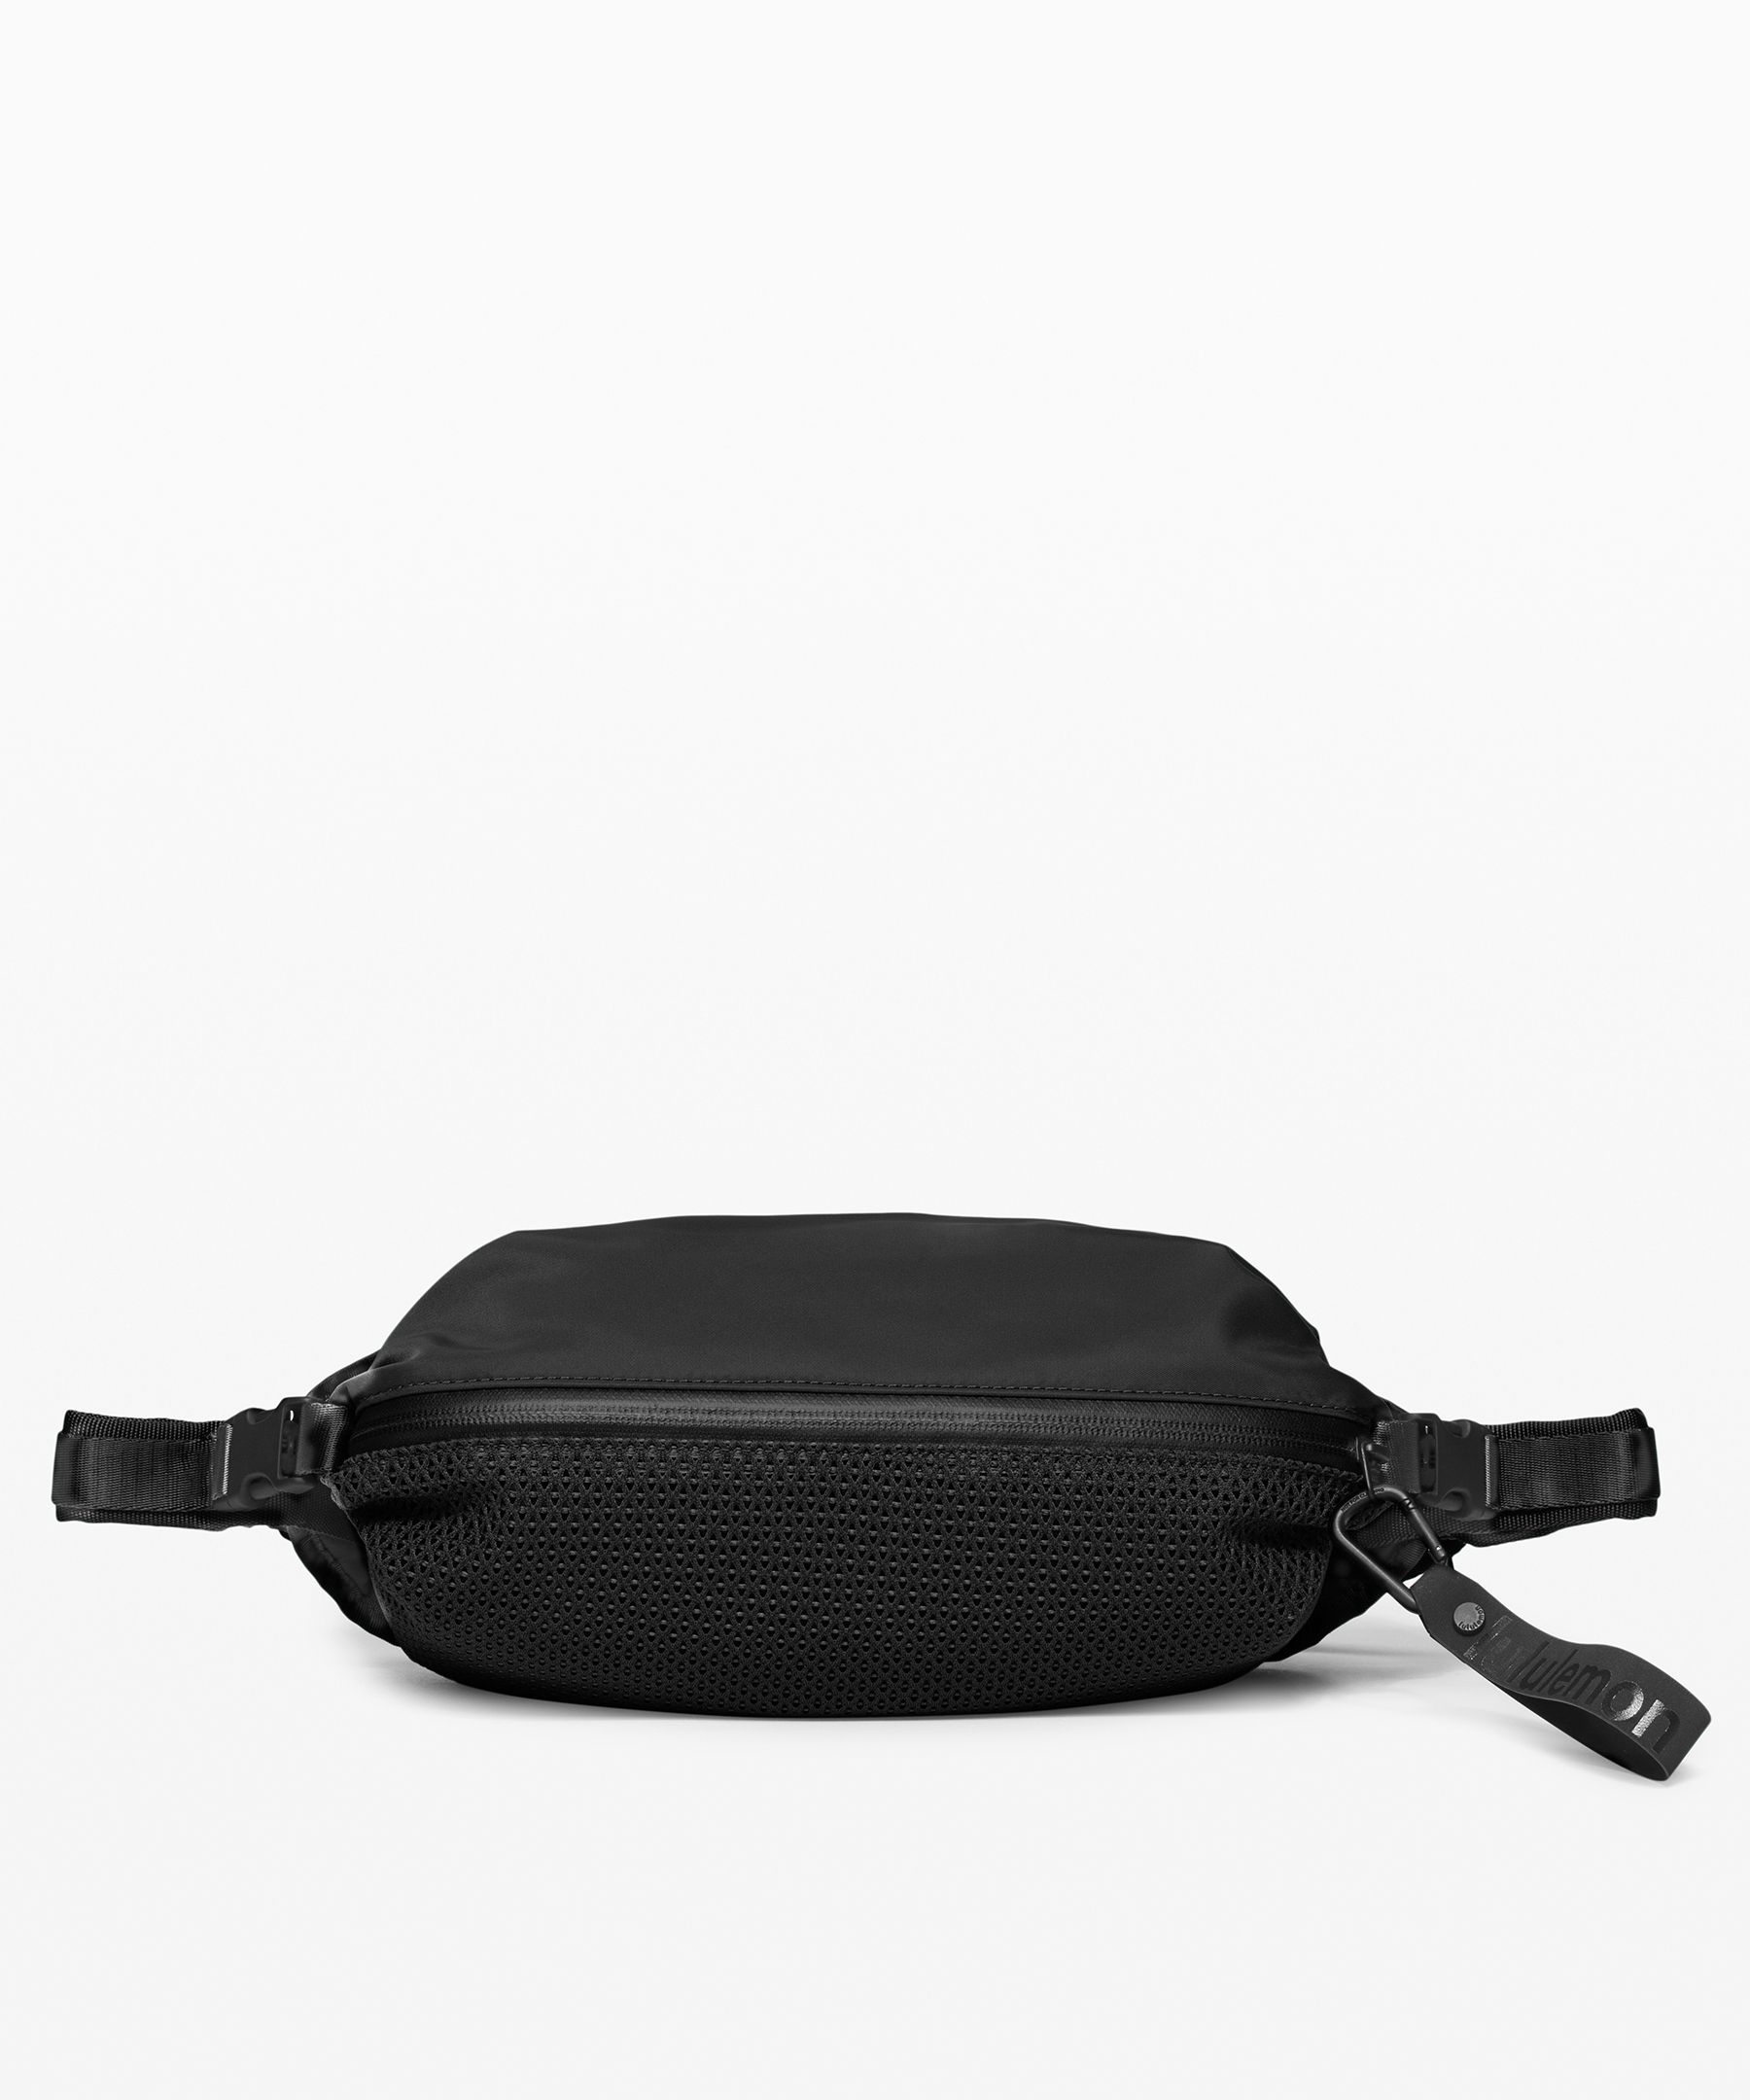 lululemon belt bag black